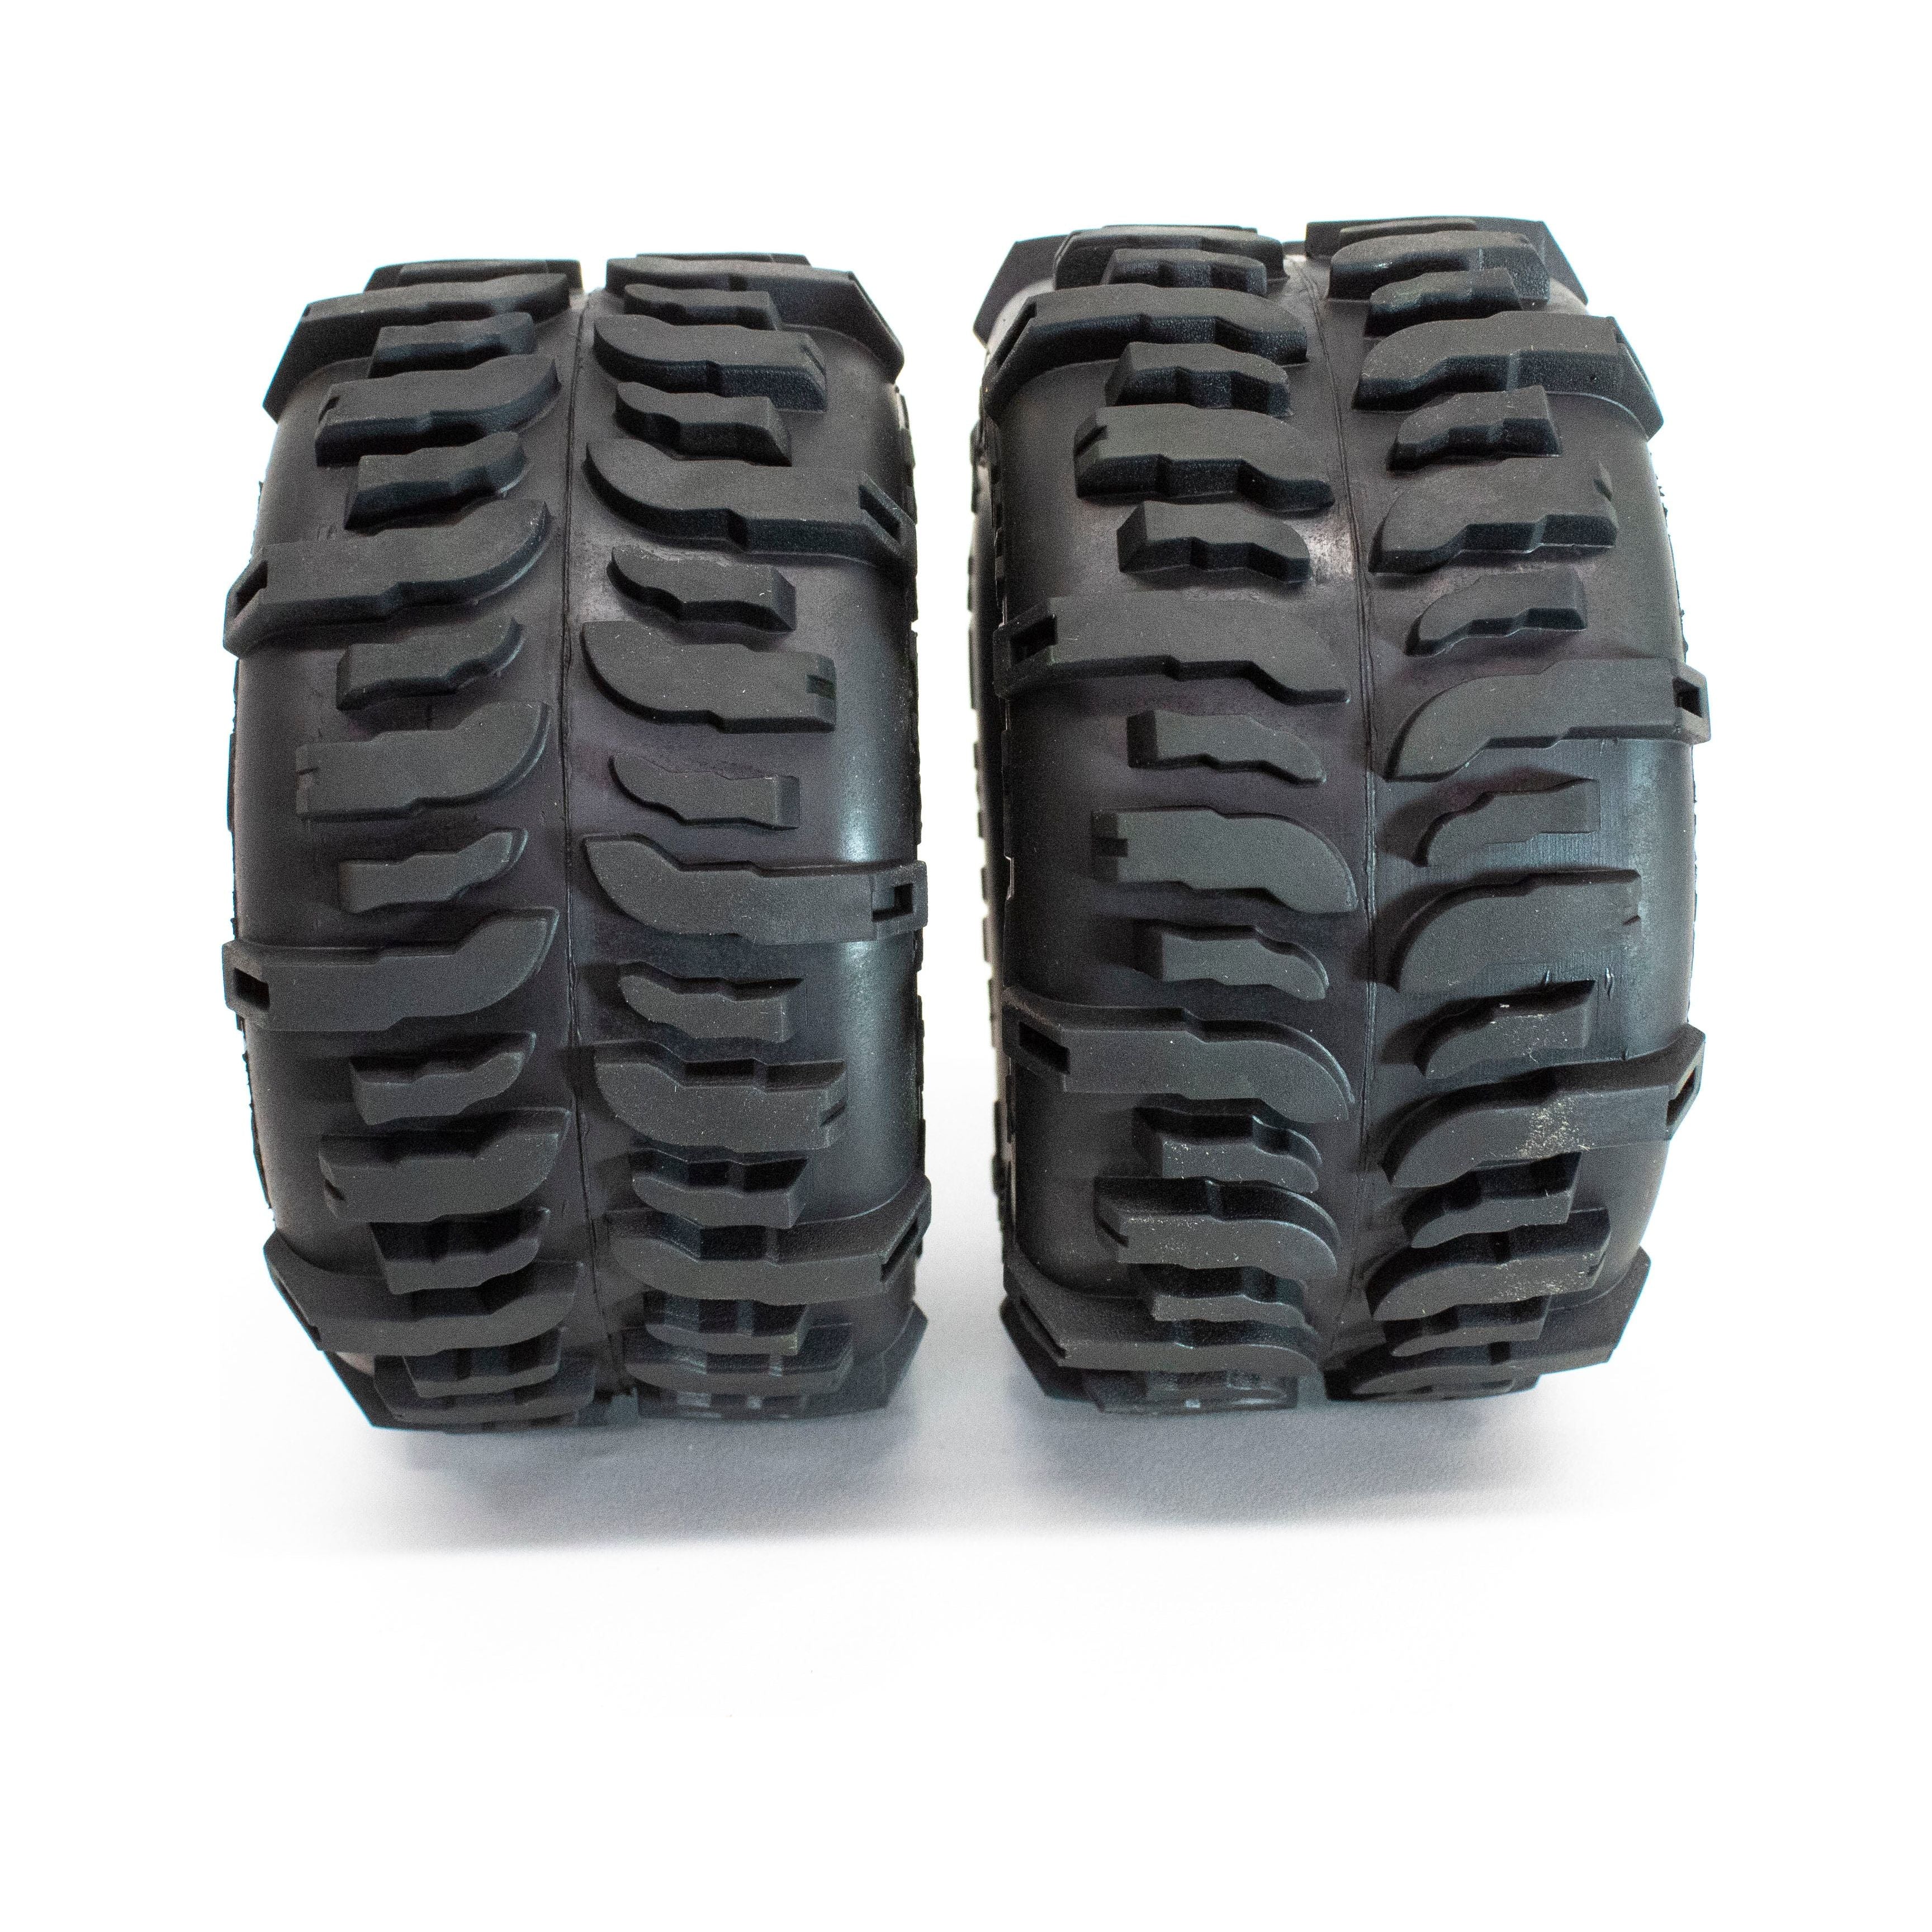 IMEX 2.2 Swamp Dawg Tires (1 Pair)